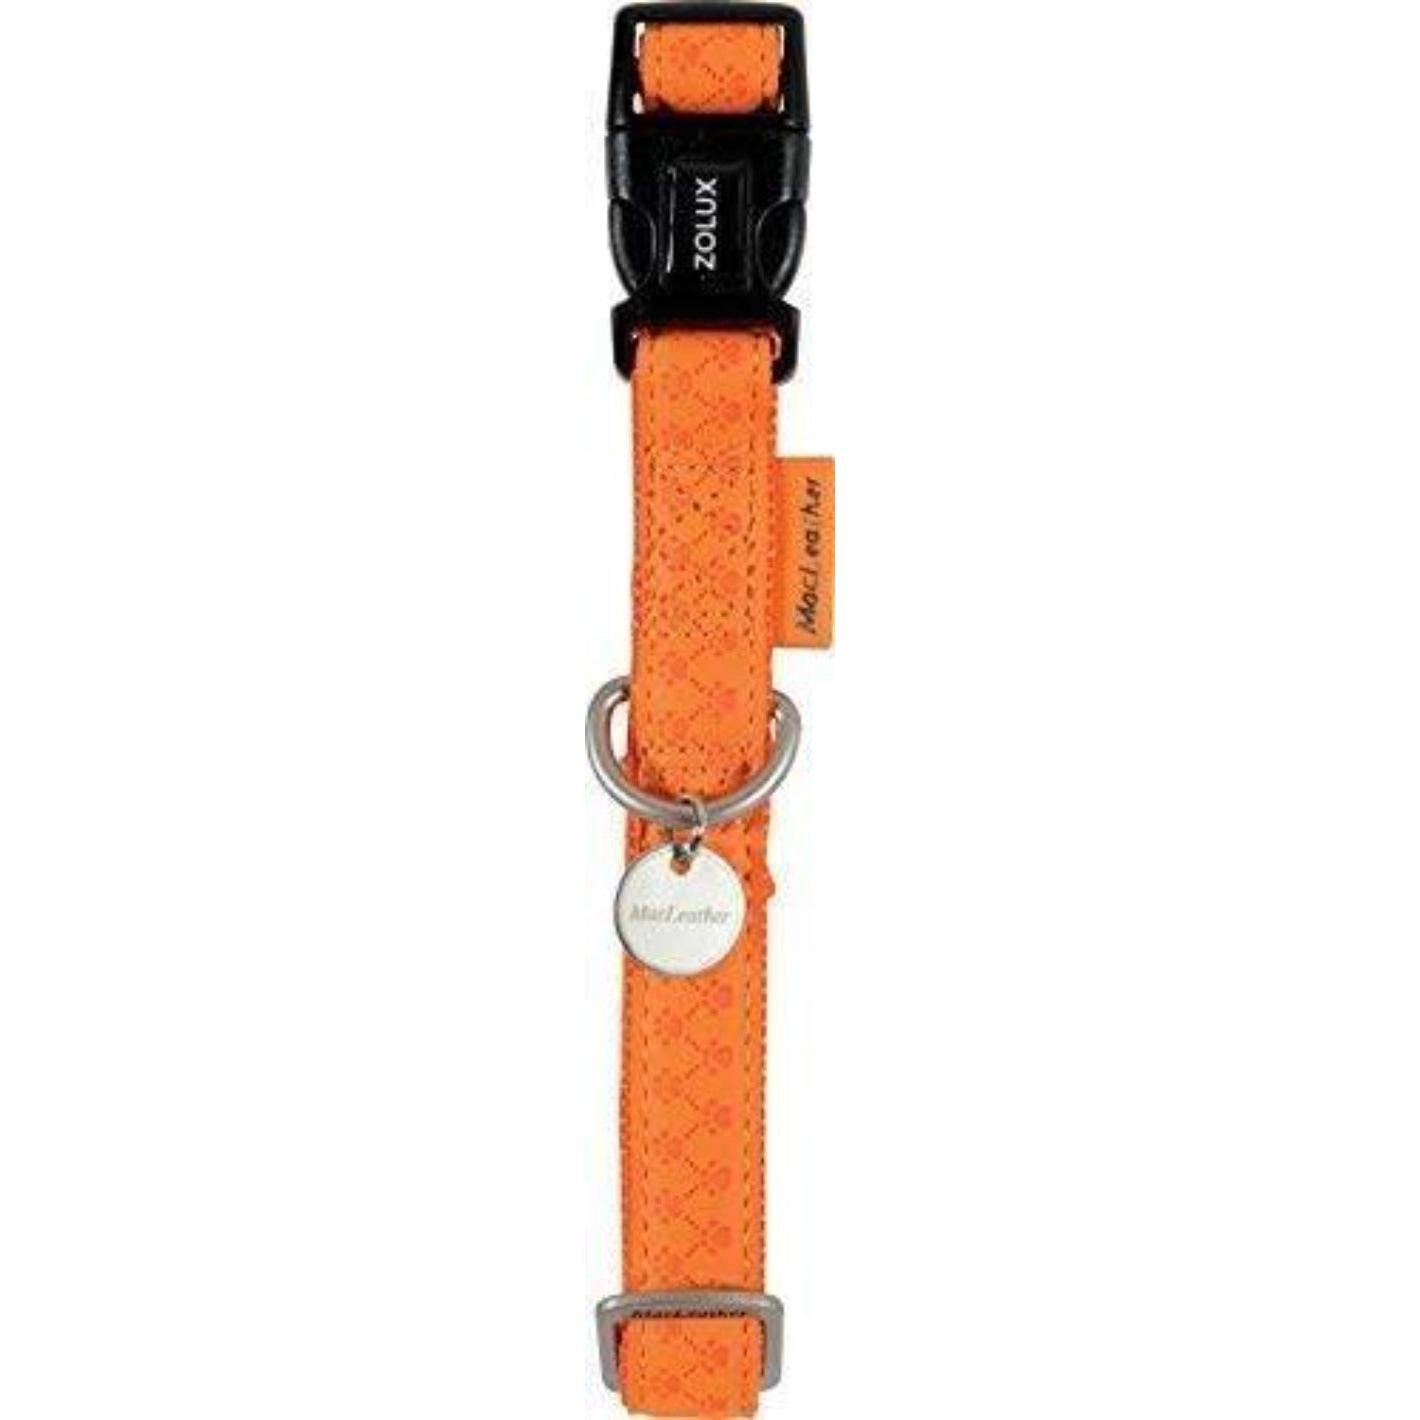 Zolux Collare per Cane Regolabile Mac Leather 210/290x10mm Arancione